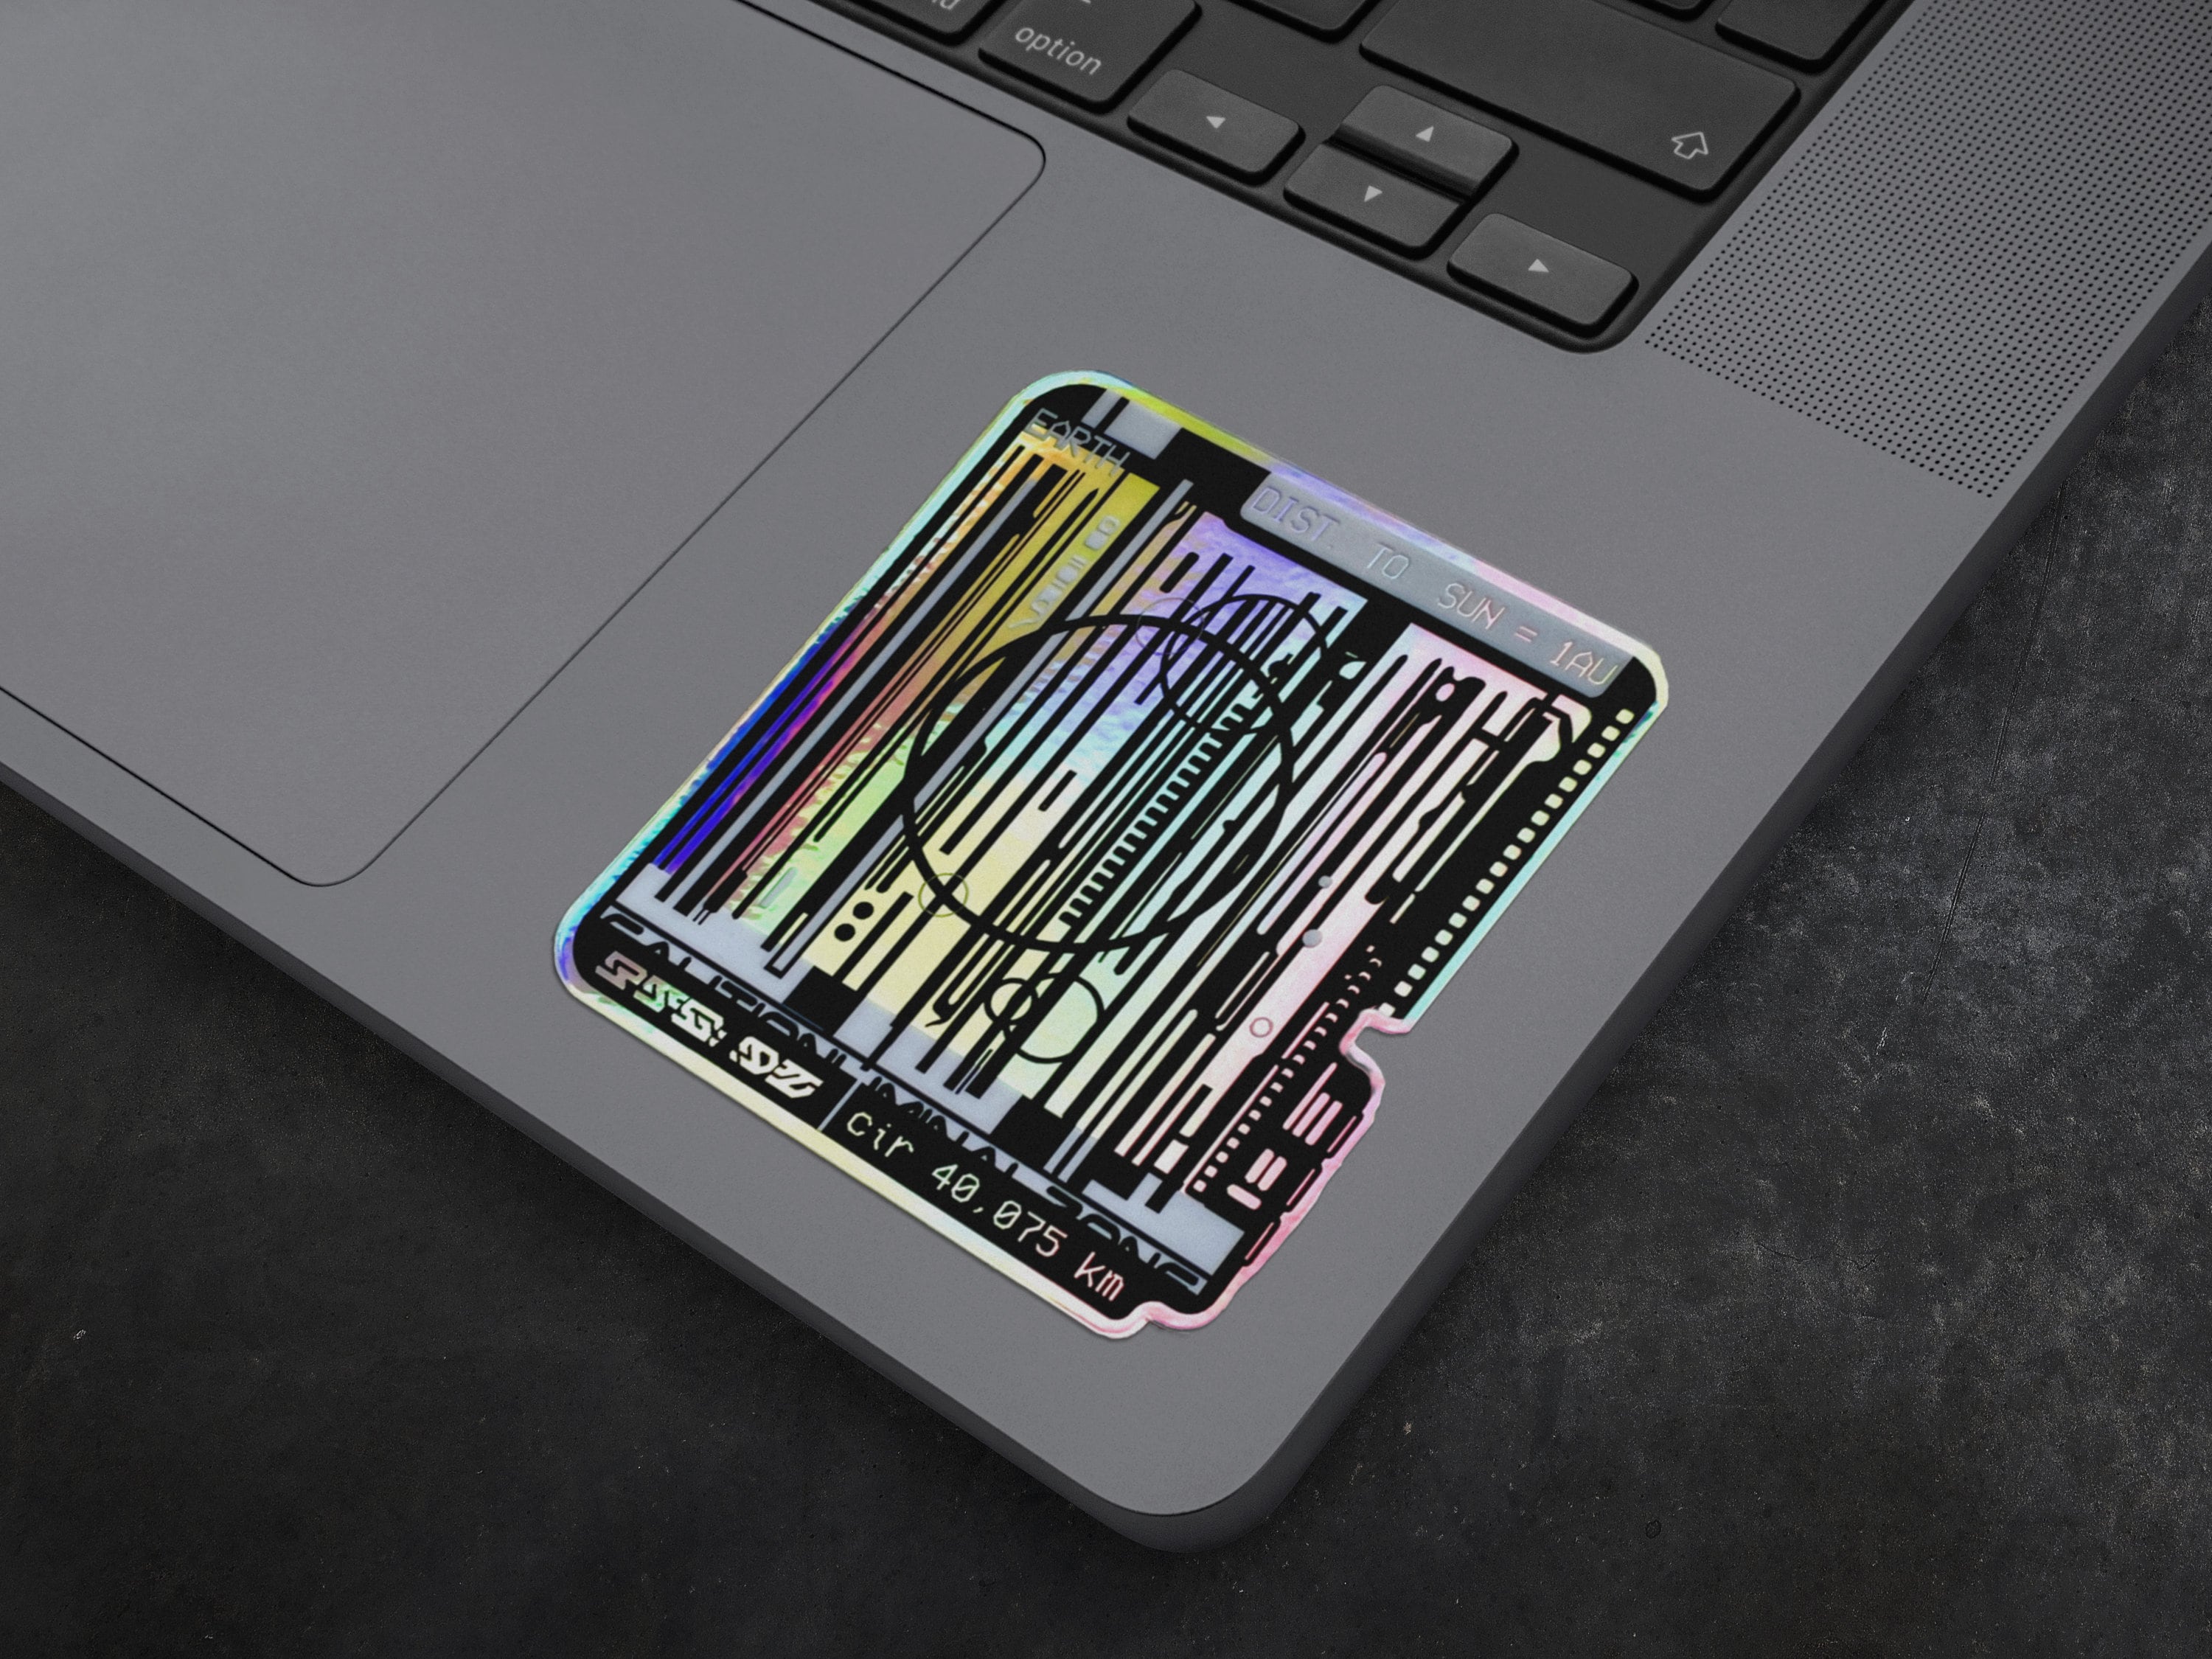 Astropunk Pass Key Holographic Vinyl Decal - Cyberpunk Laptop Sticker Gift - Futuristic Astronomy / Space Sci-Fi Water Bottle Decal